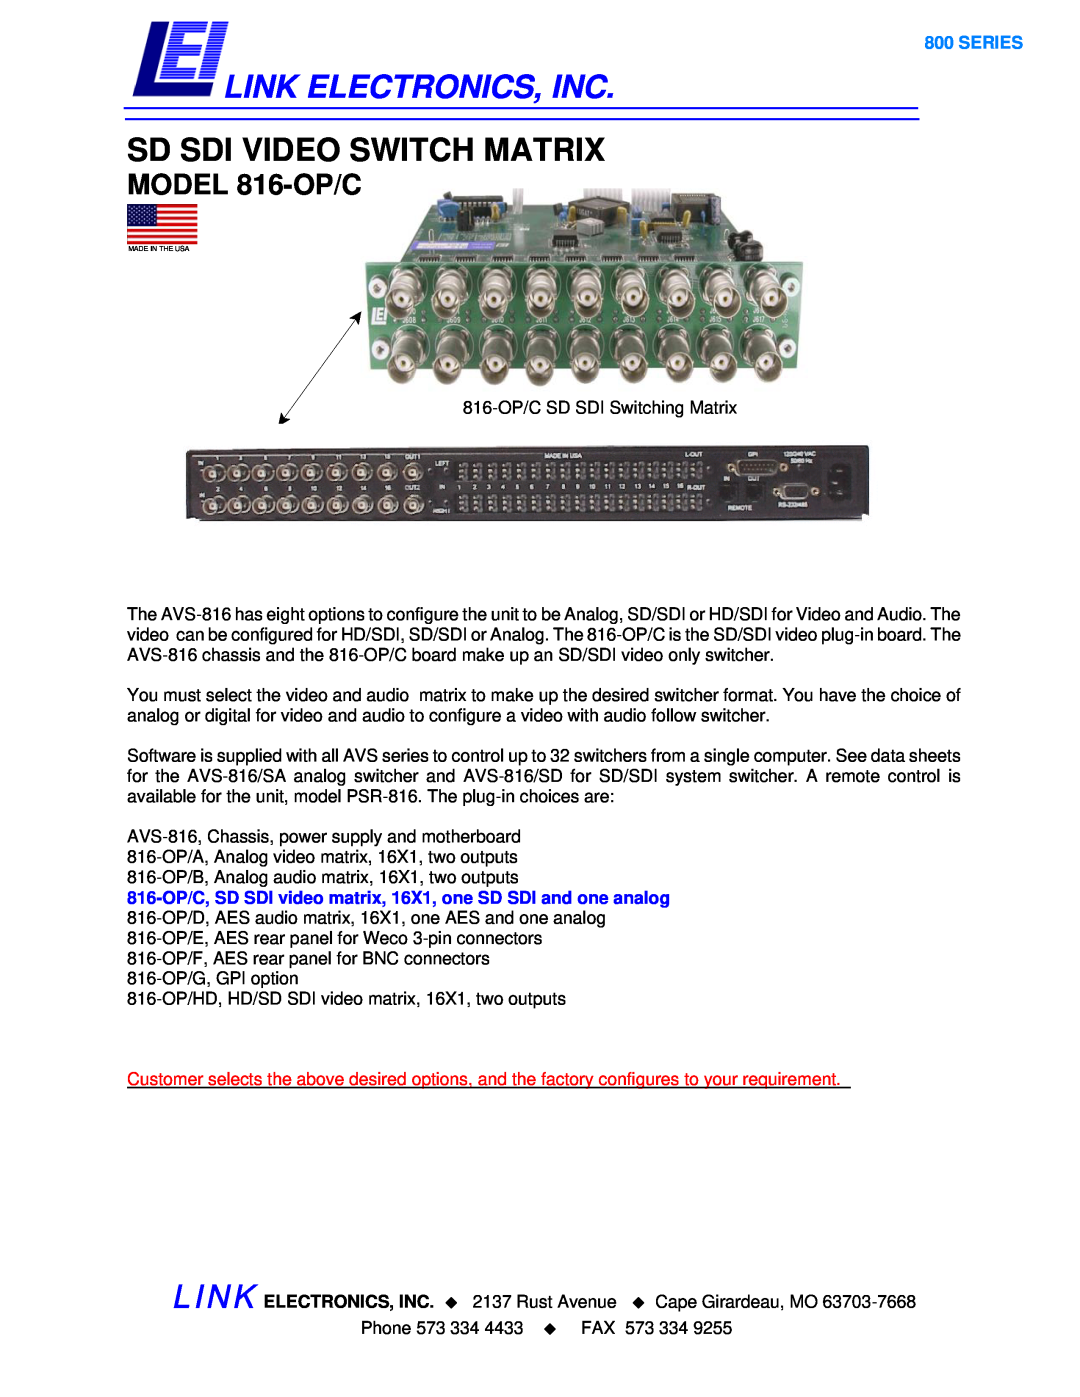 Link electronic manual Link Electronics, Inc, Sd Sdi Video Switch Matrix, MODEL 816-OP/C, Series 